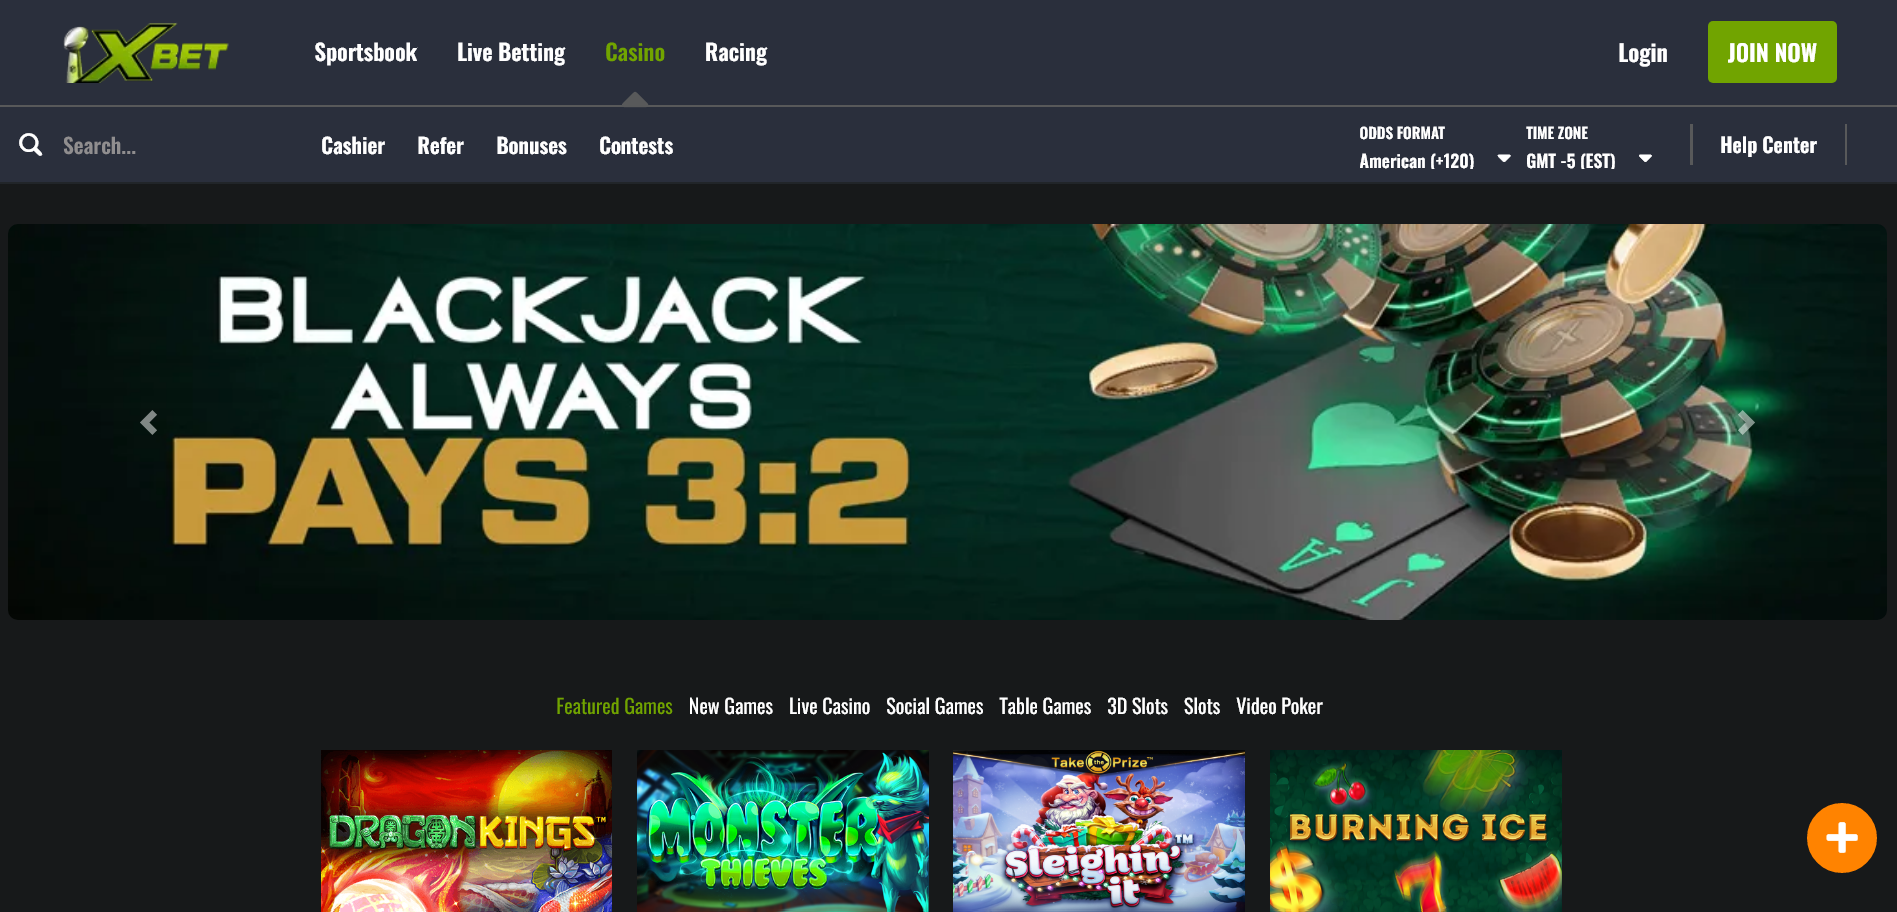 Best Online Casinos In The USA - XBet Casino Games